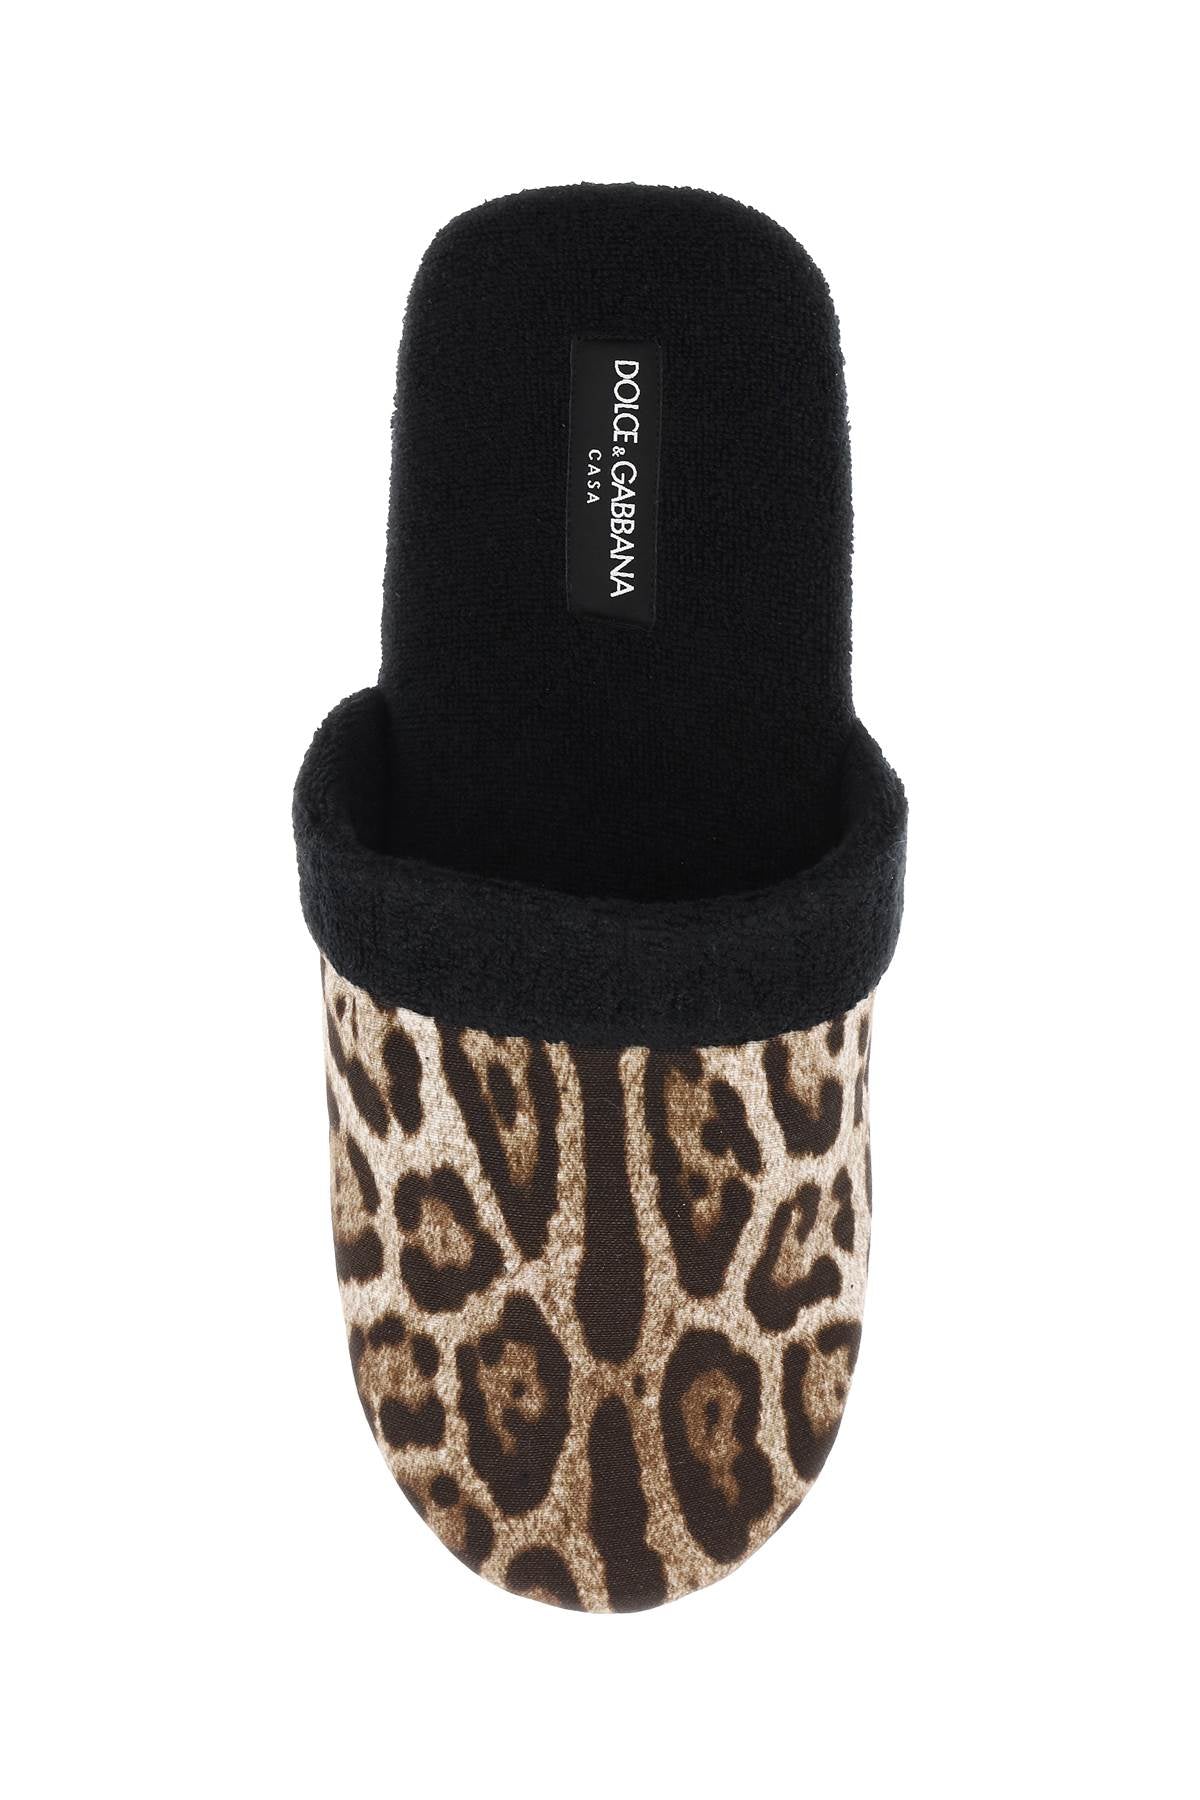 Dolce & gabbana 'leopardo' terry slippers-1